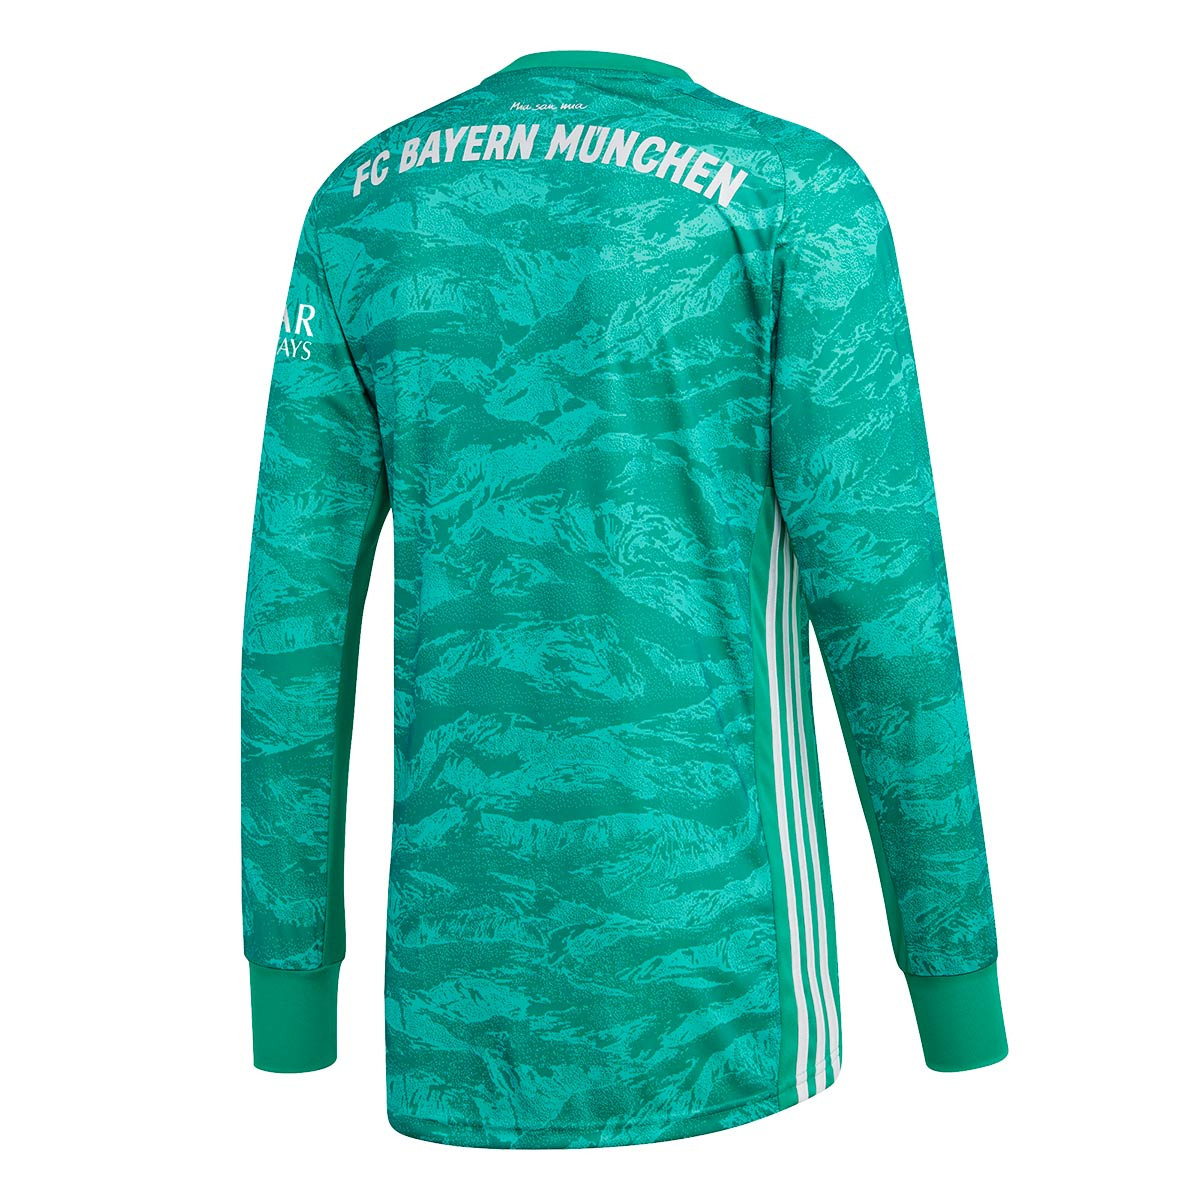 adidas 2019 goalkeeper